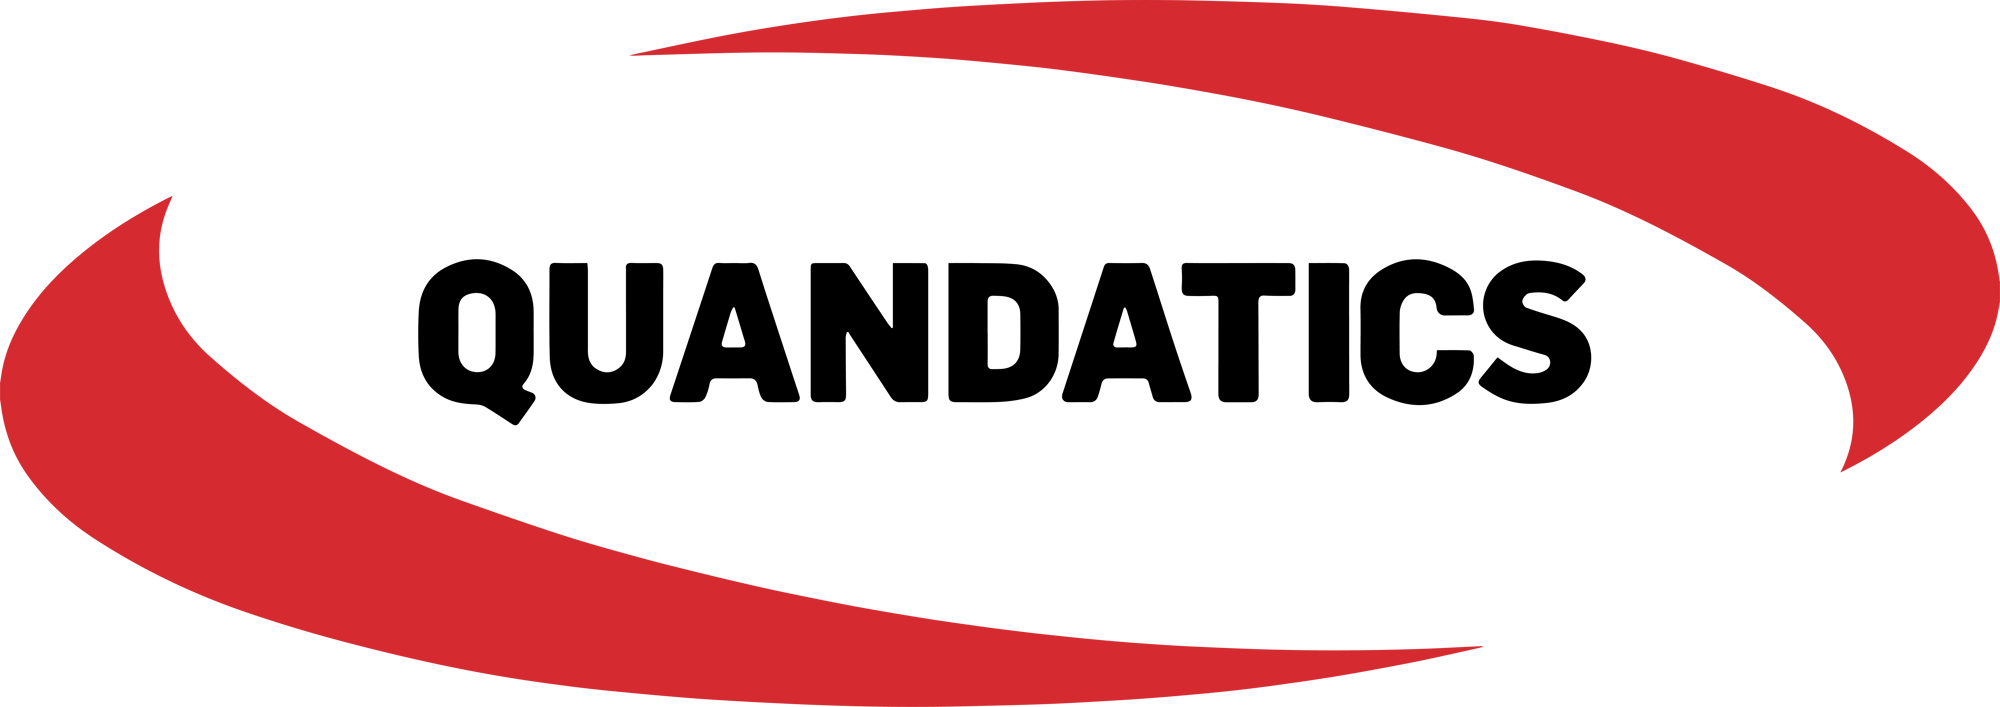 Quandatics at 1000mm_RGB